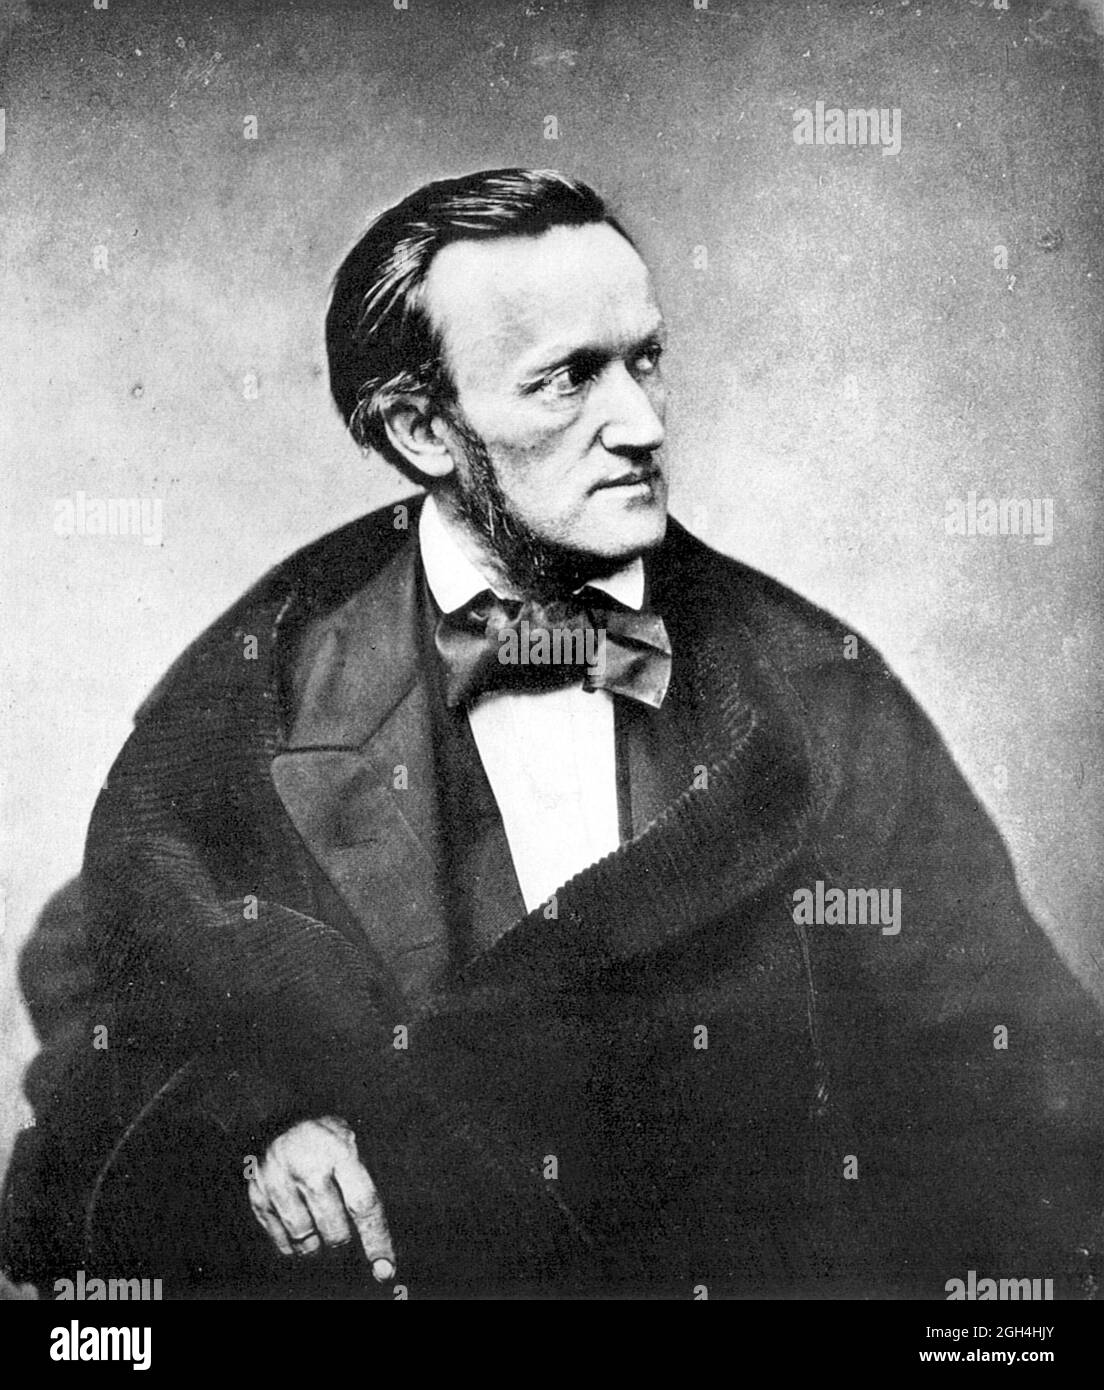 Ritratto fotografico vintage - Richard Wagner Foto Stock